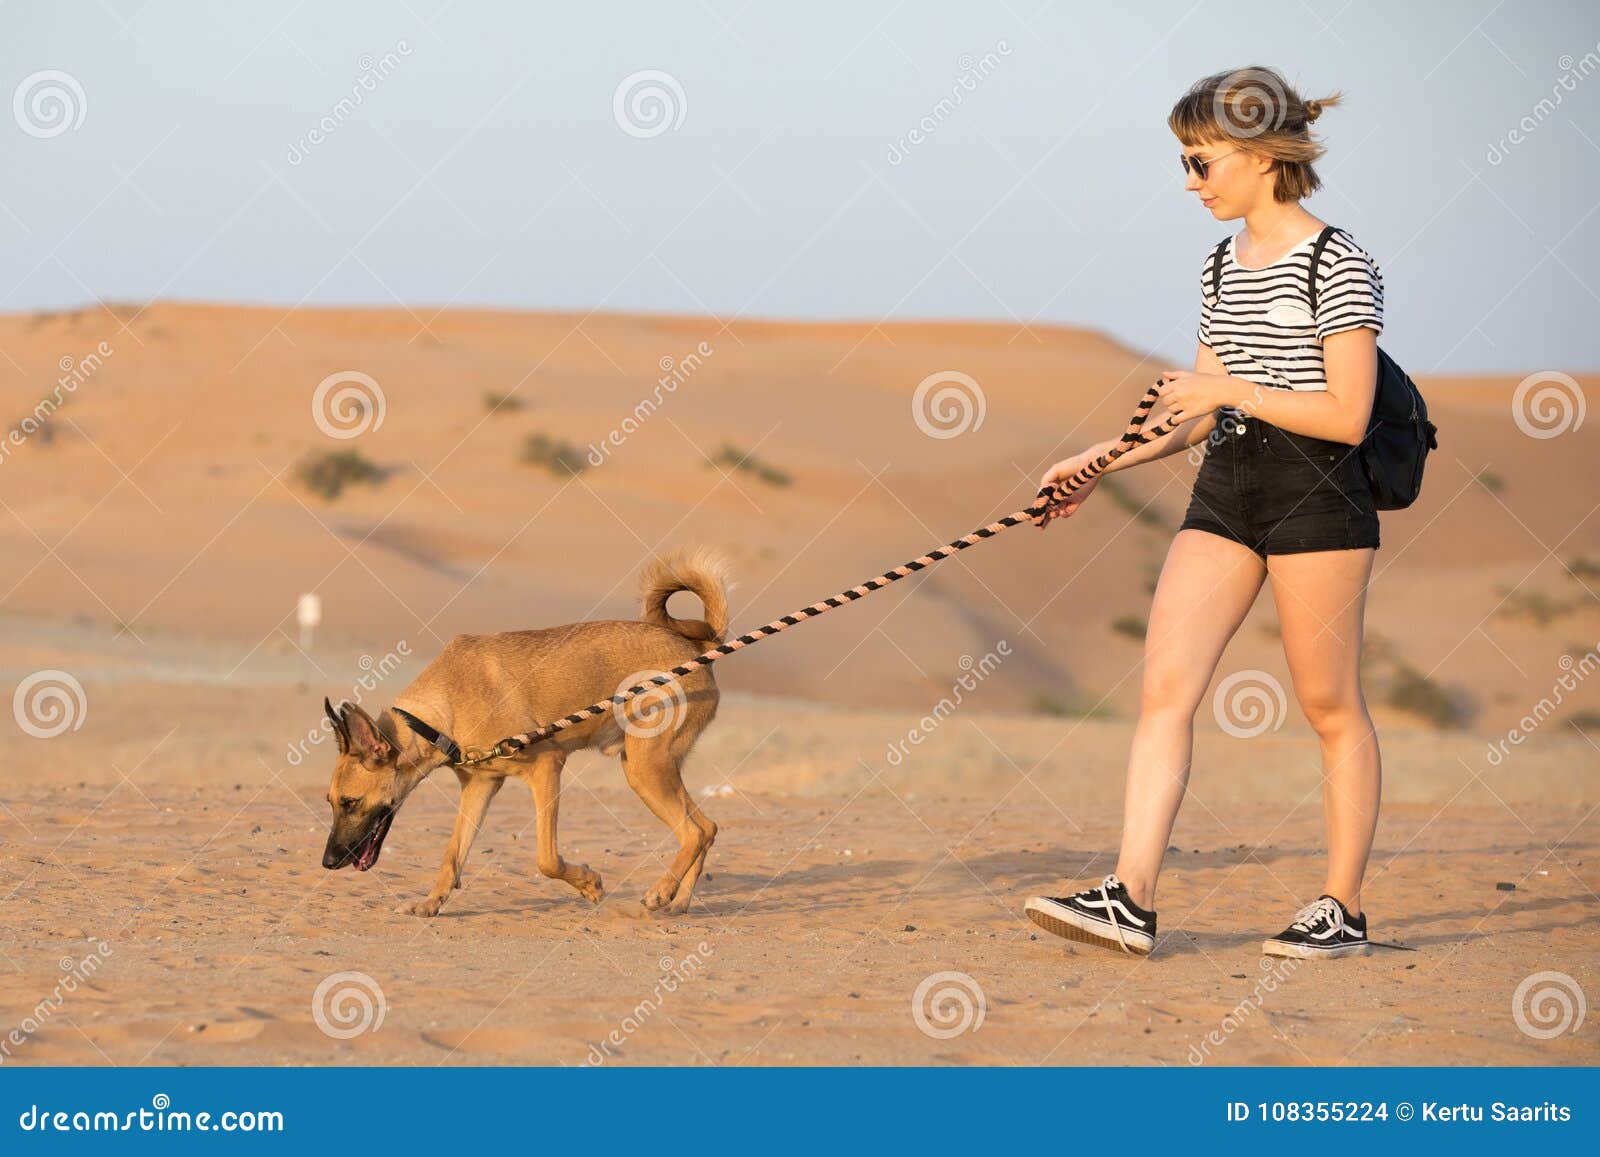 Amedelyofpotpourri: Basenji Dog Dubai